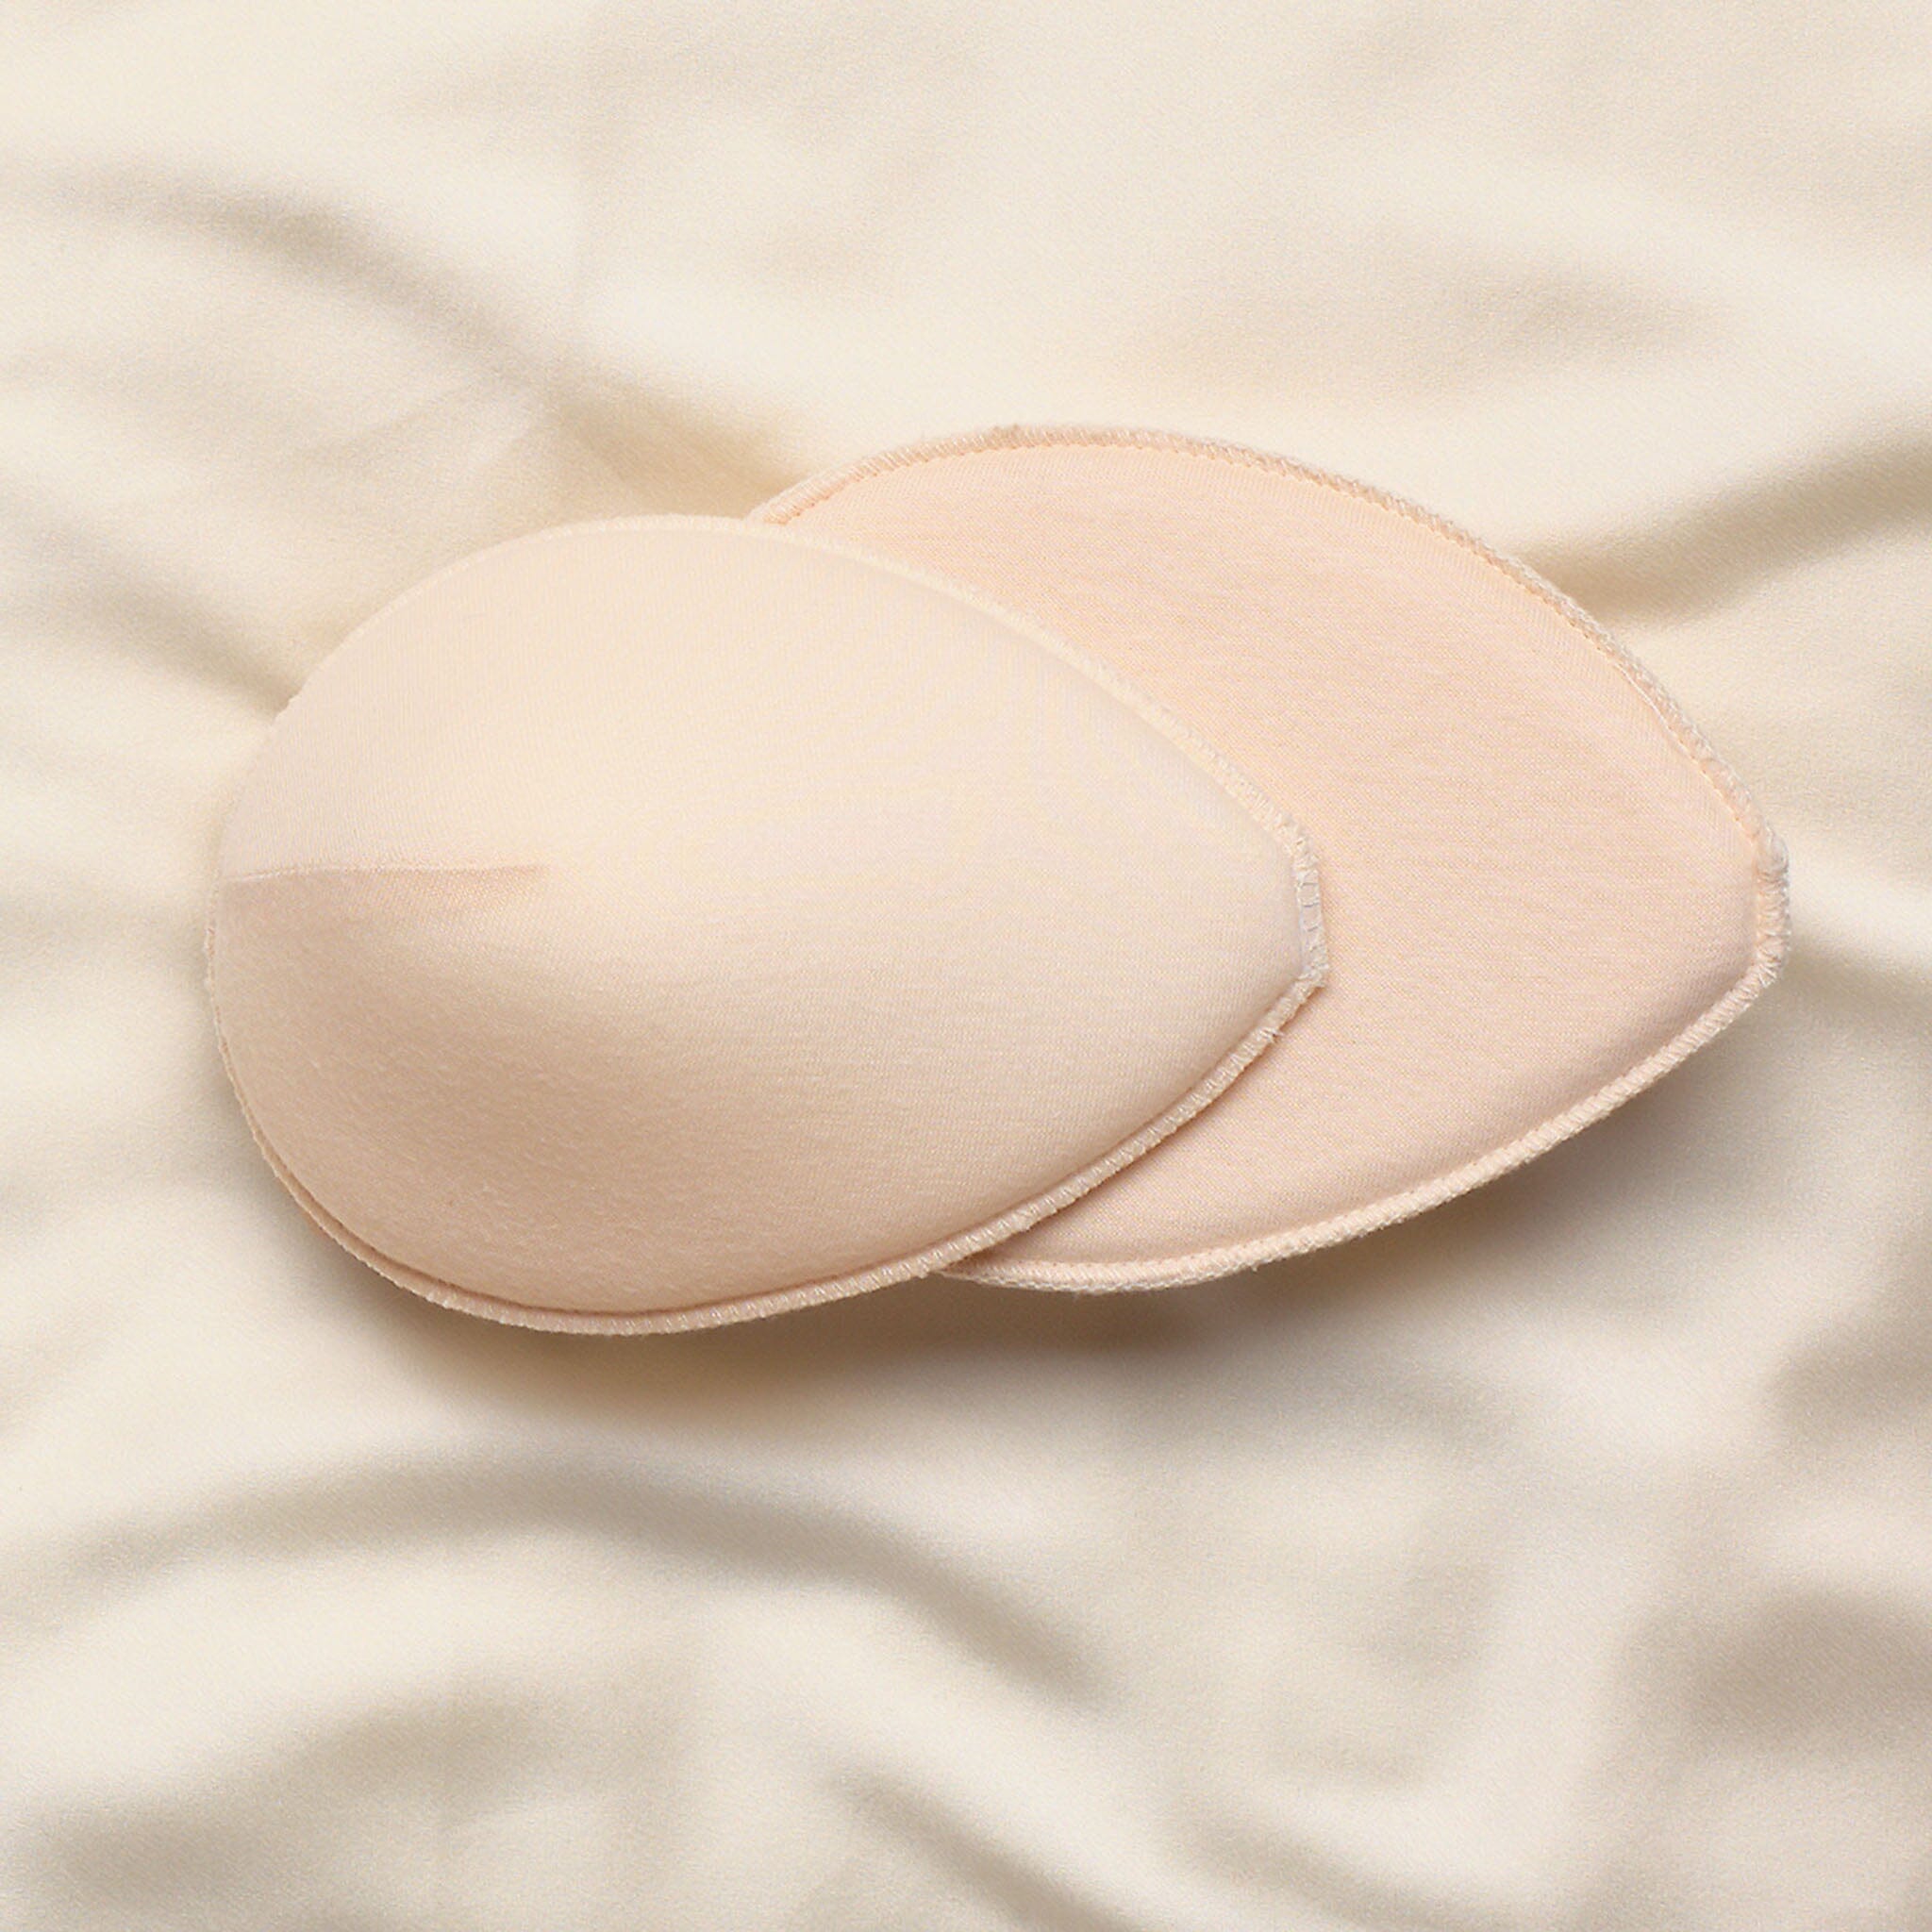 Buy Set of F(oo)b Breast Form Inserts - Order Bra Accessories